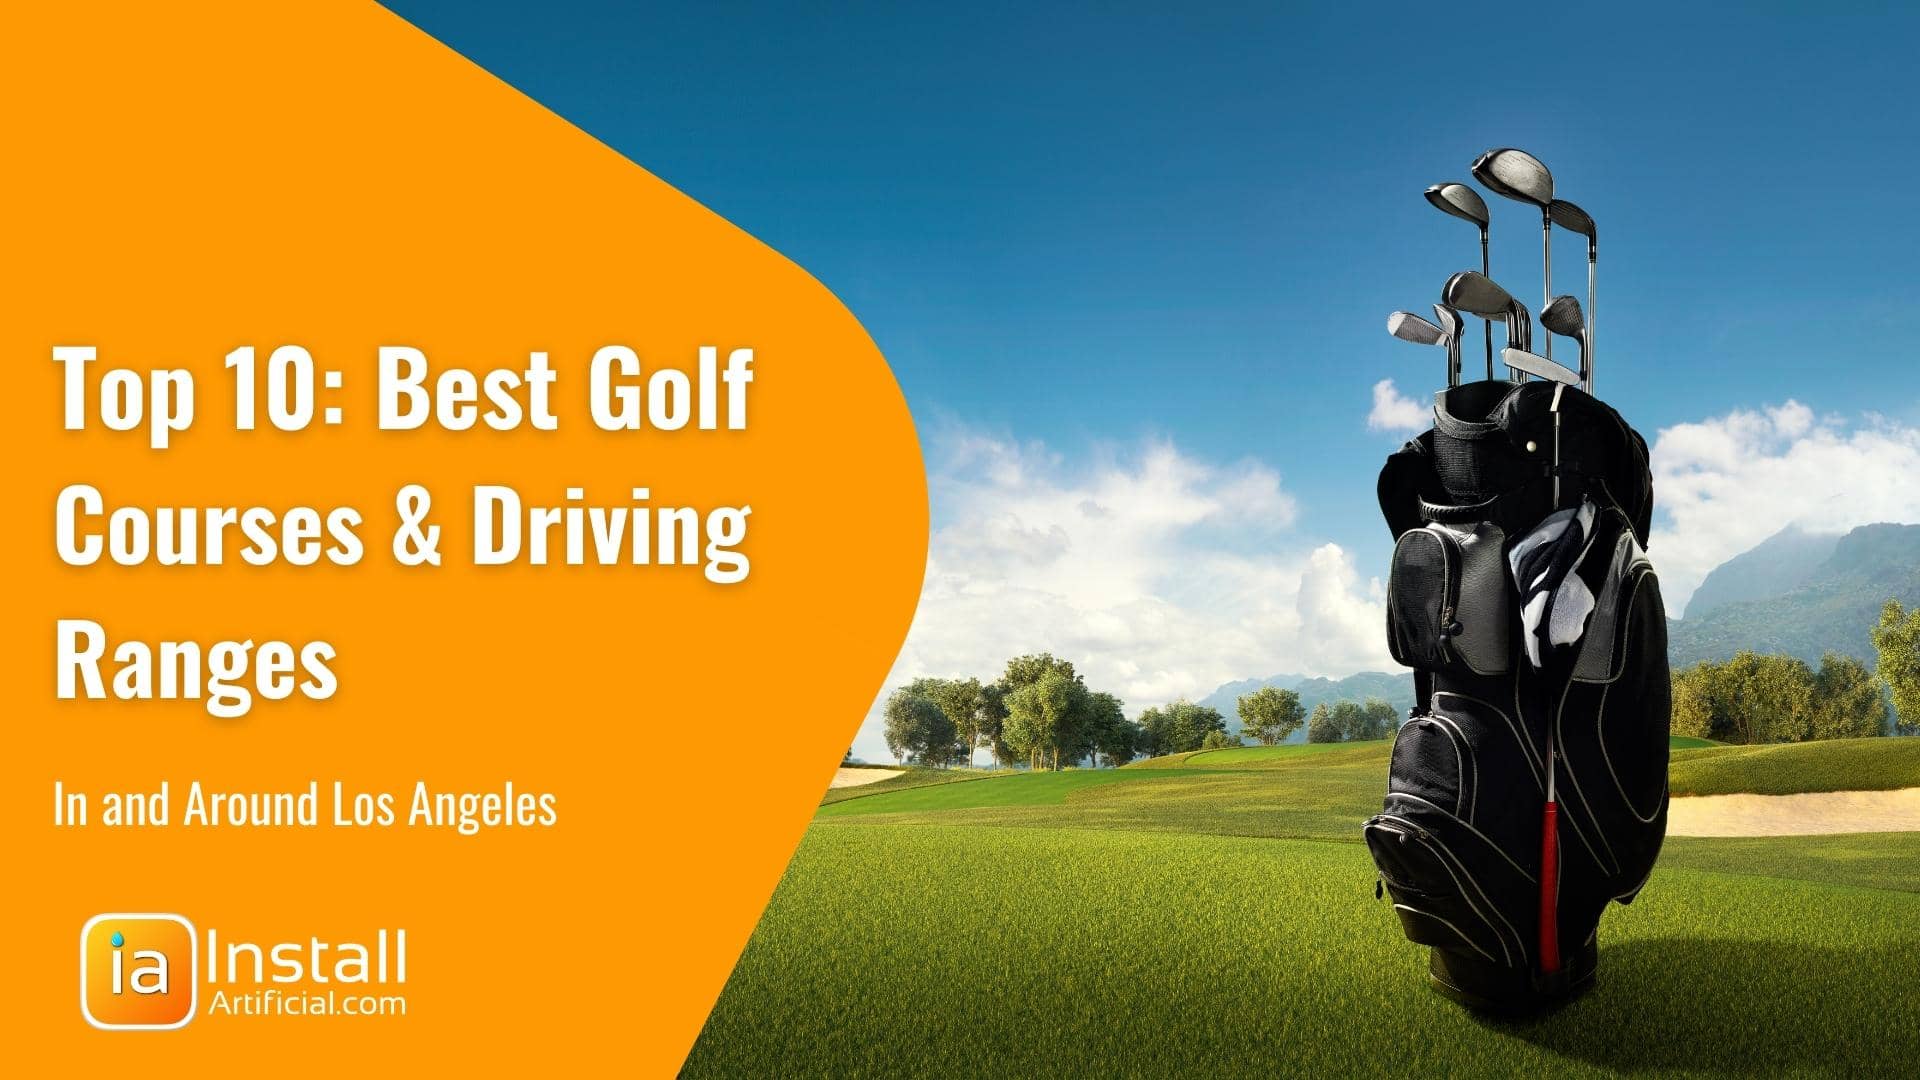 The 10 best Topgolf locations in great golf buddies trip destinations